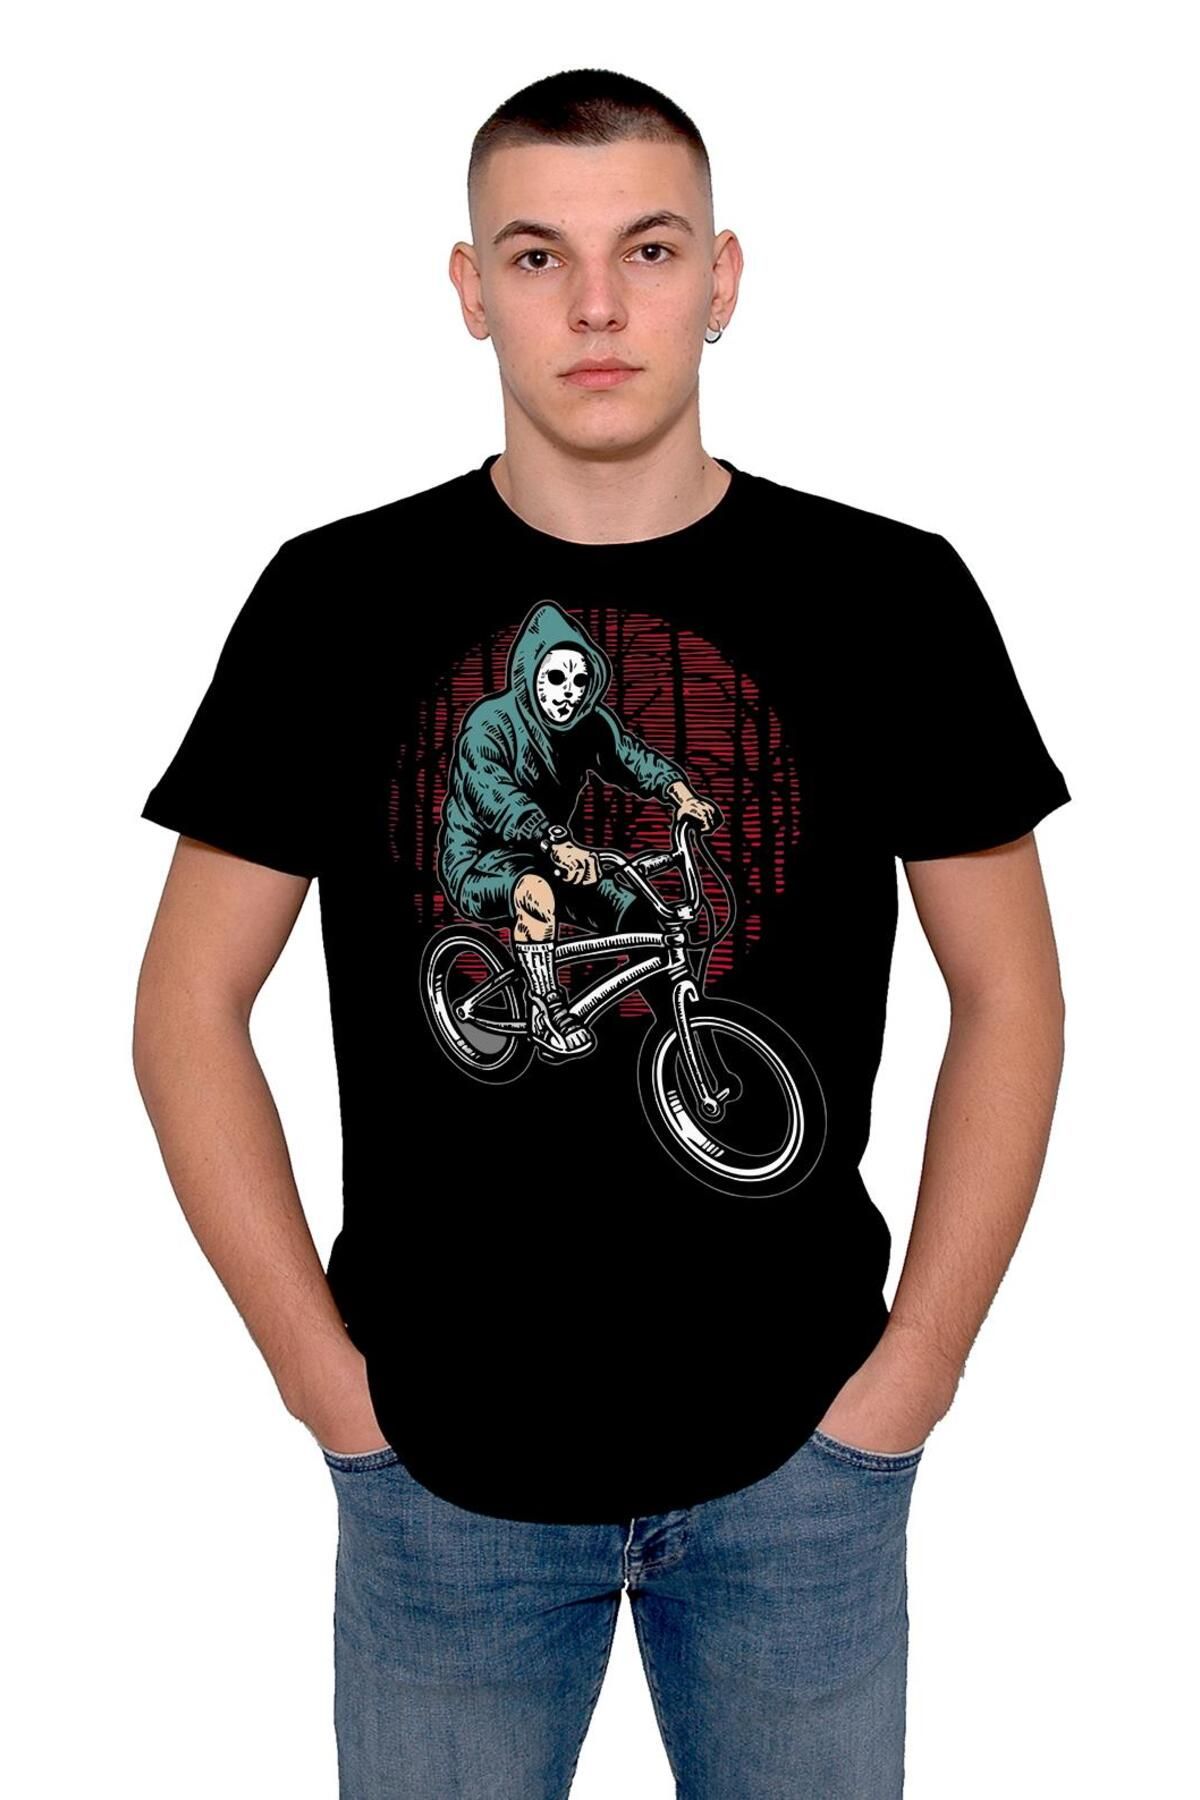 BIGROON Bisiklet Bicycle Maske Mask Retro Tişört Unisex T-shirt